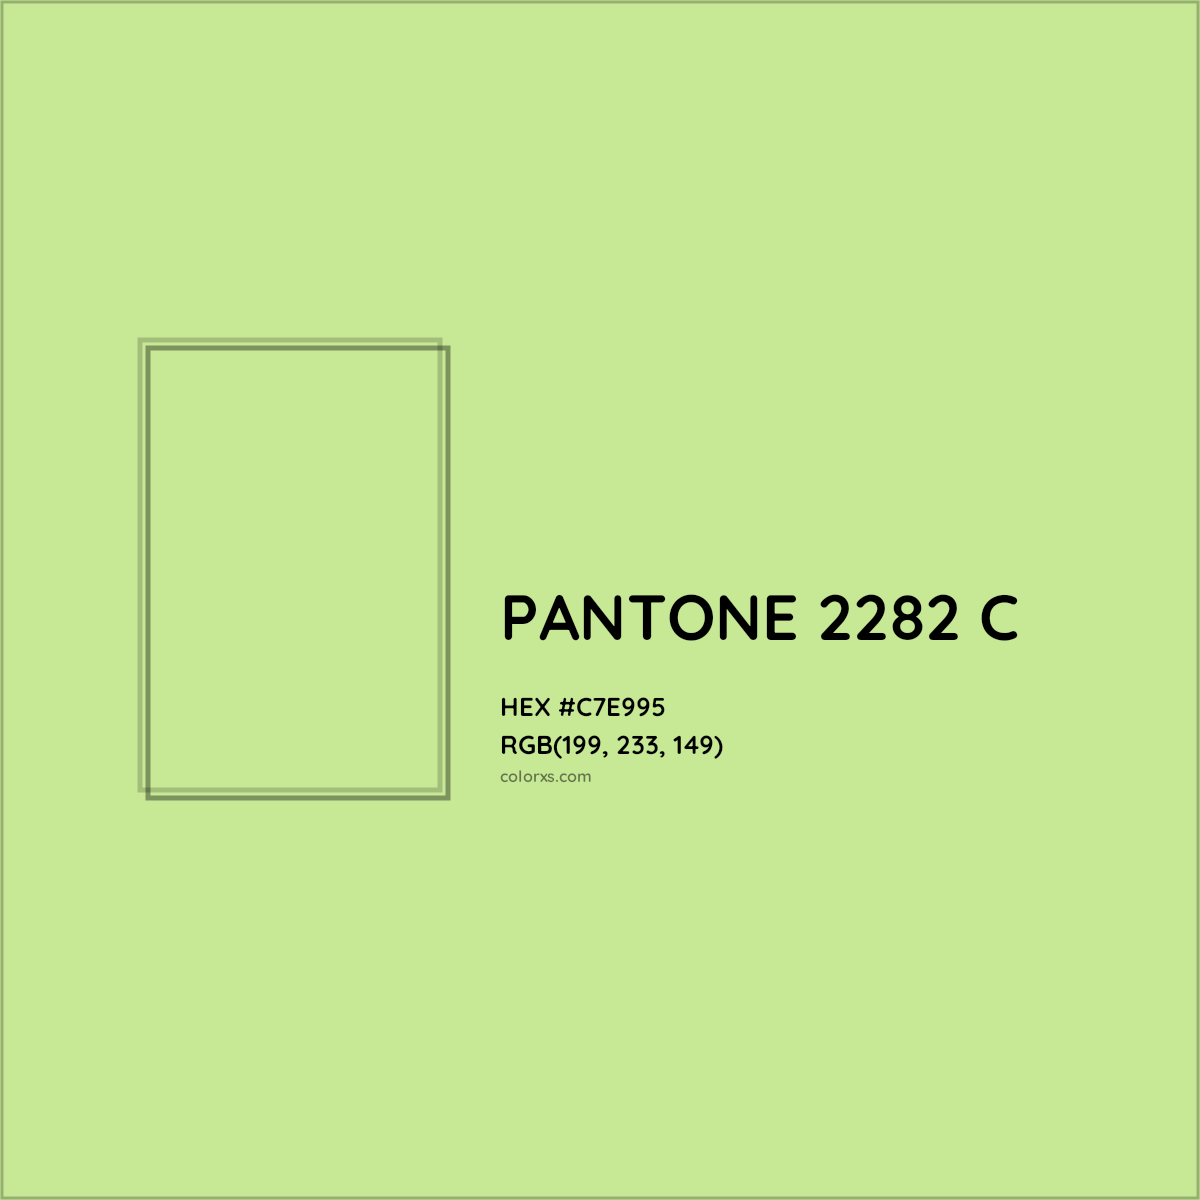 HEX #C7E995 PANTONE 2282 C CMS Pantone PMS - Color Code